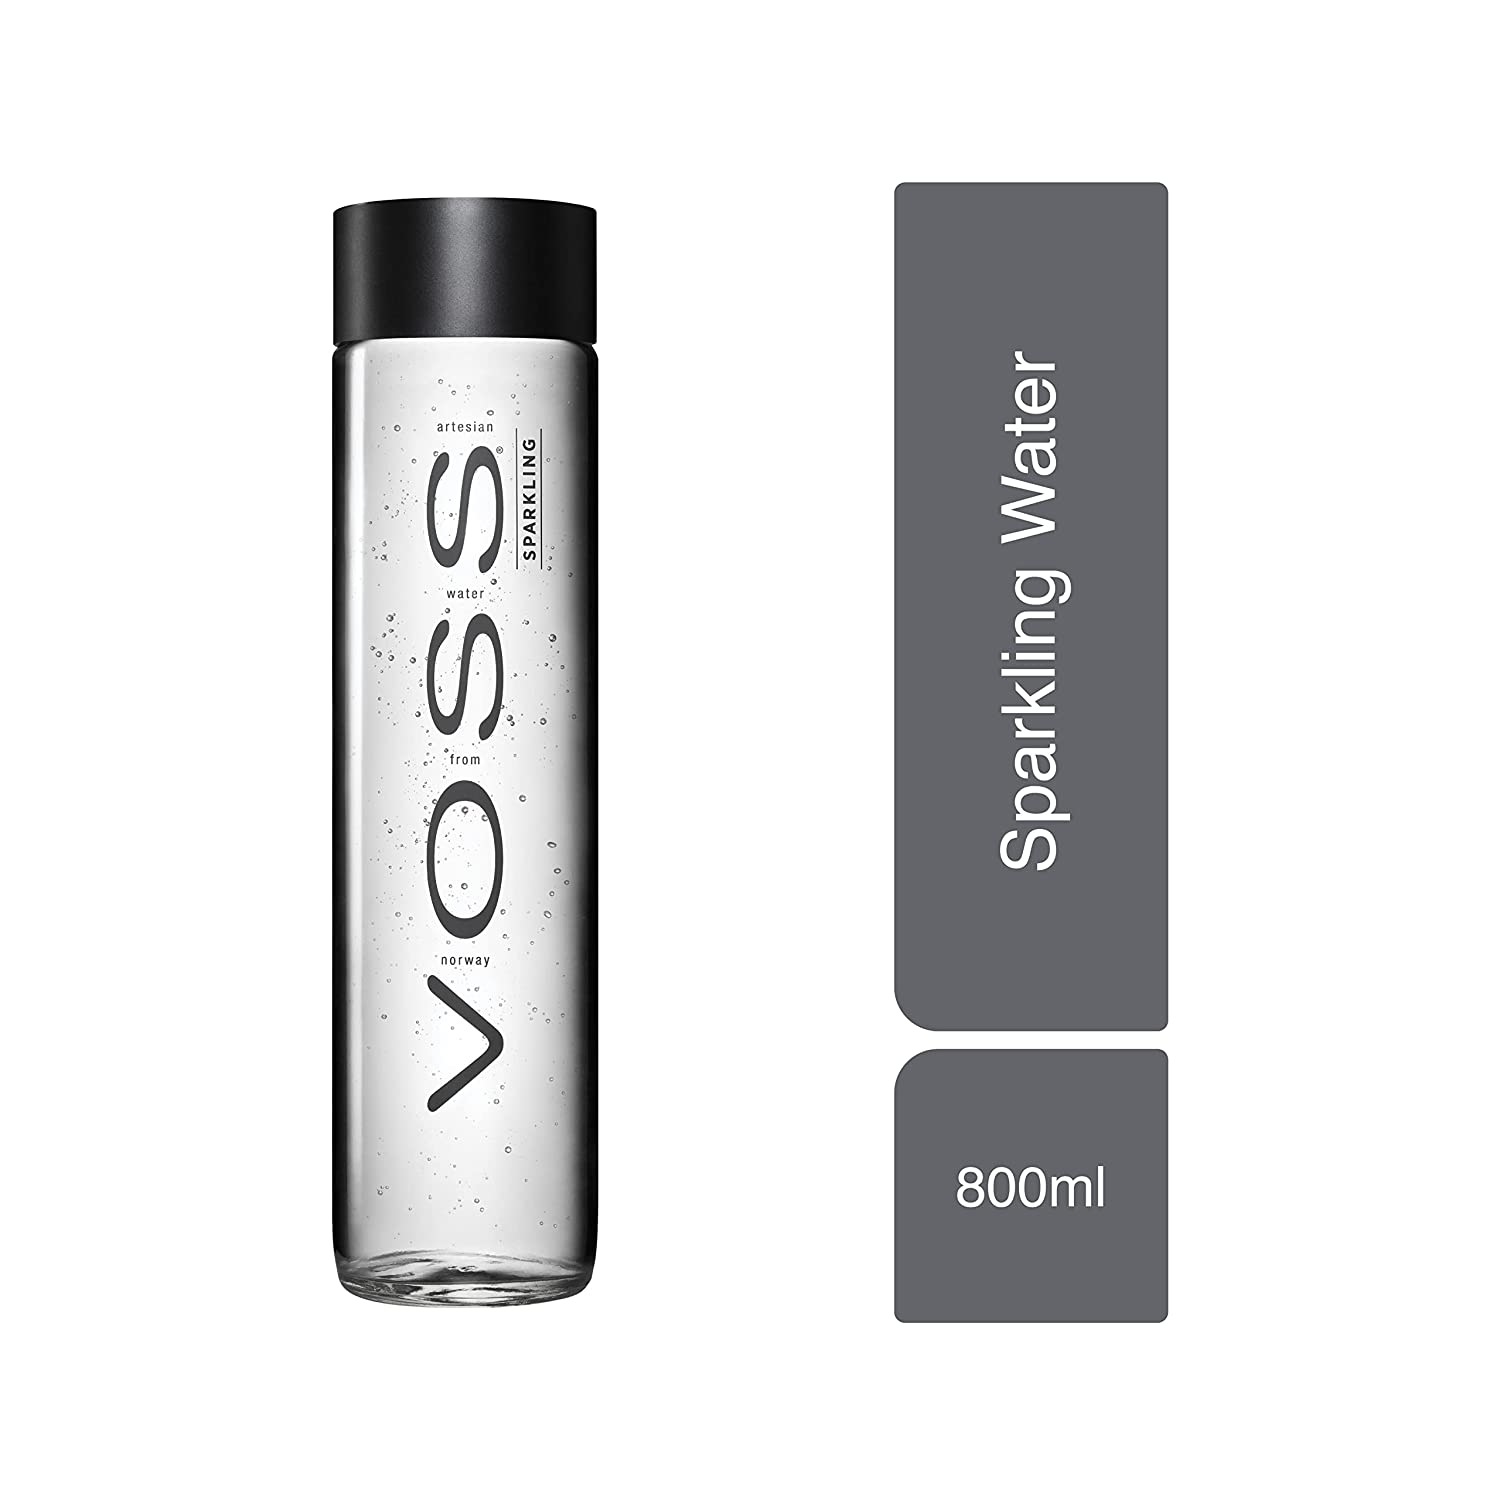 VOSS Artesian Sparkling Water, 800ml - Glass Bottle